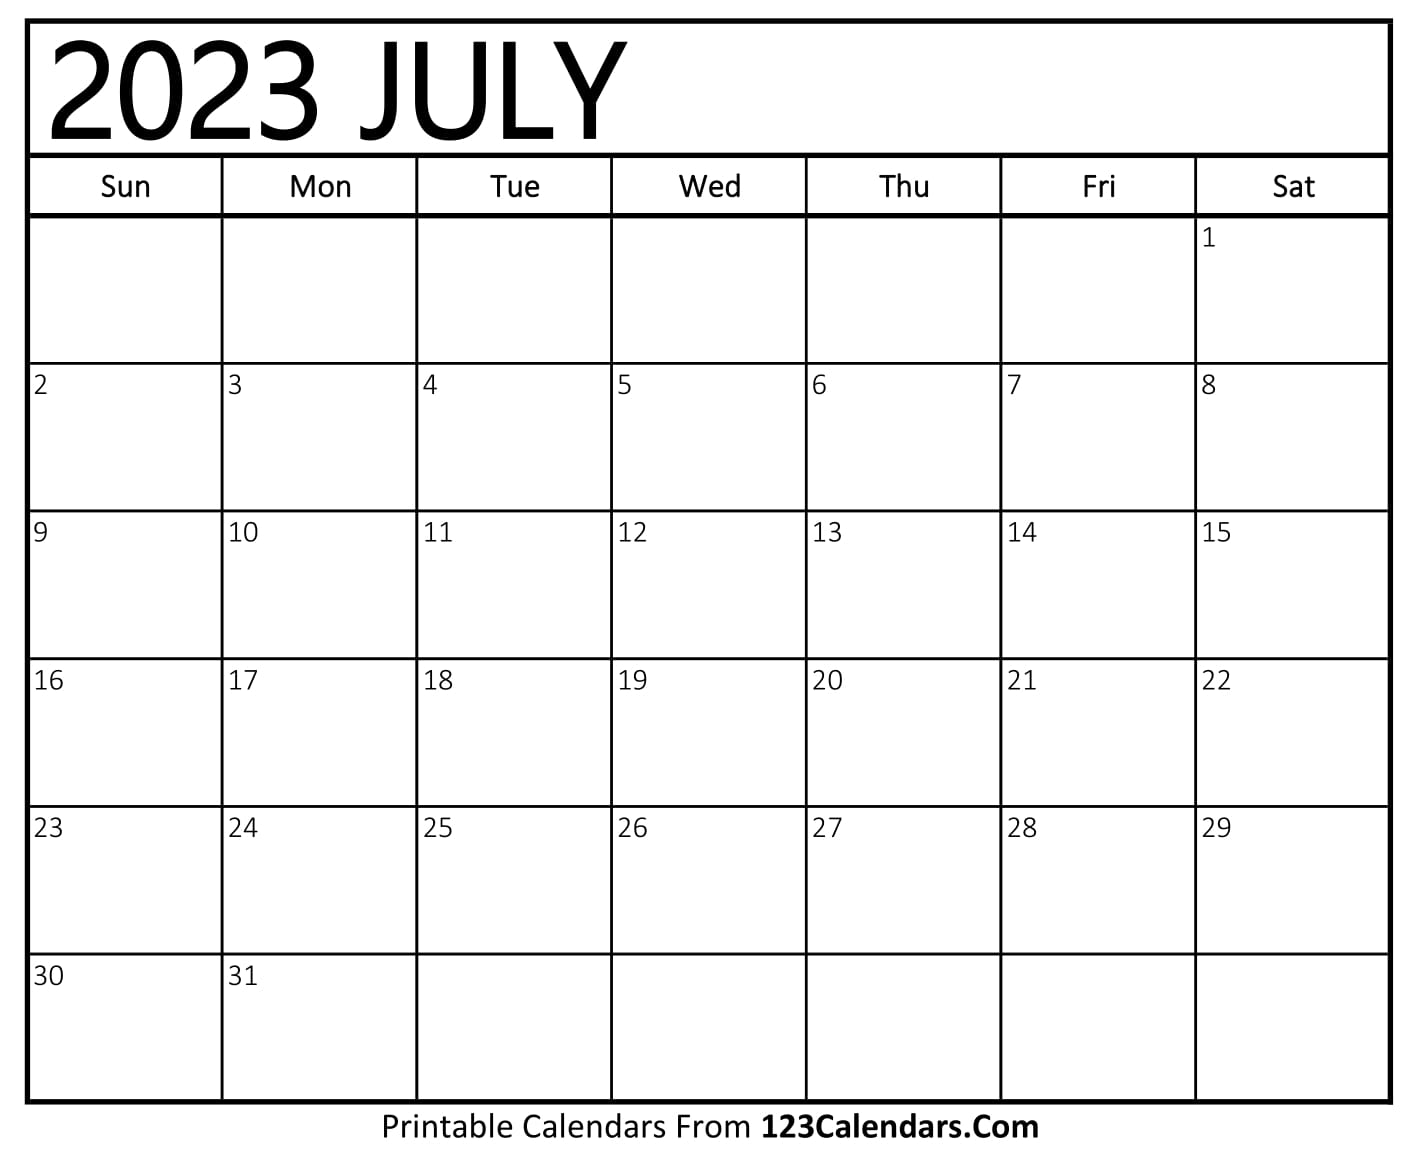 Printable 2023 July Calendar